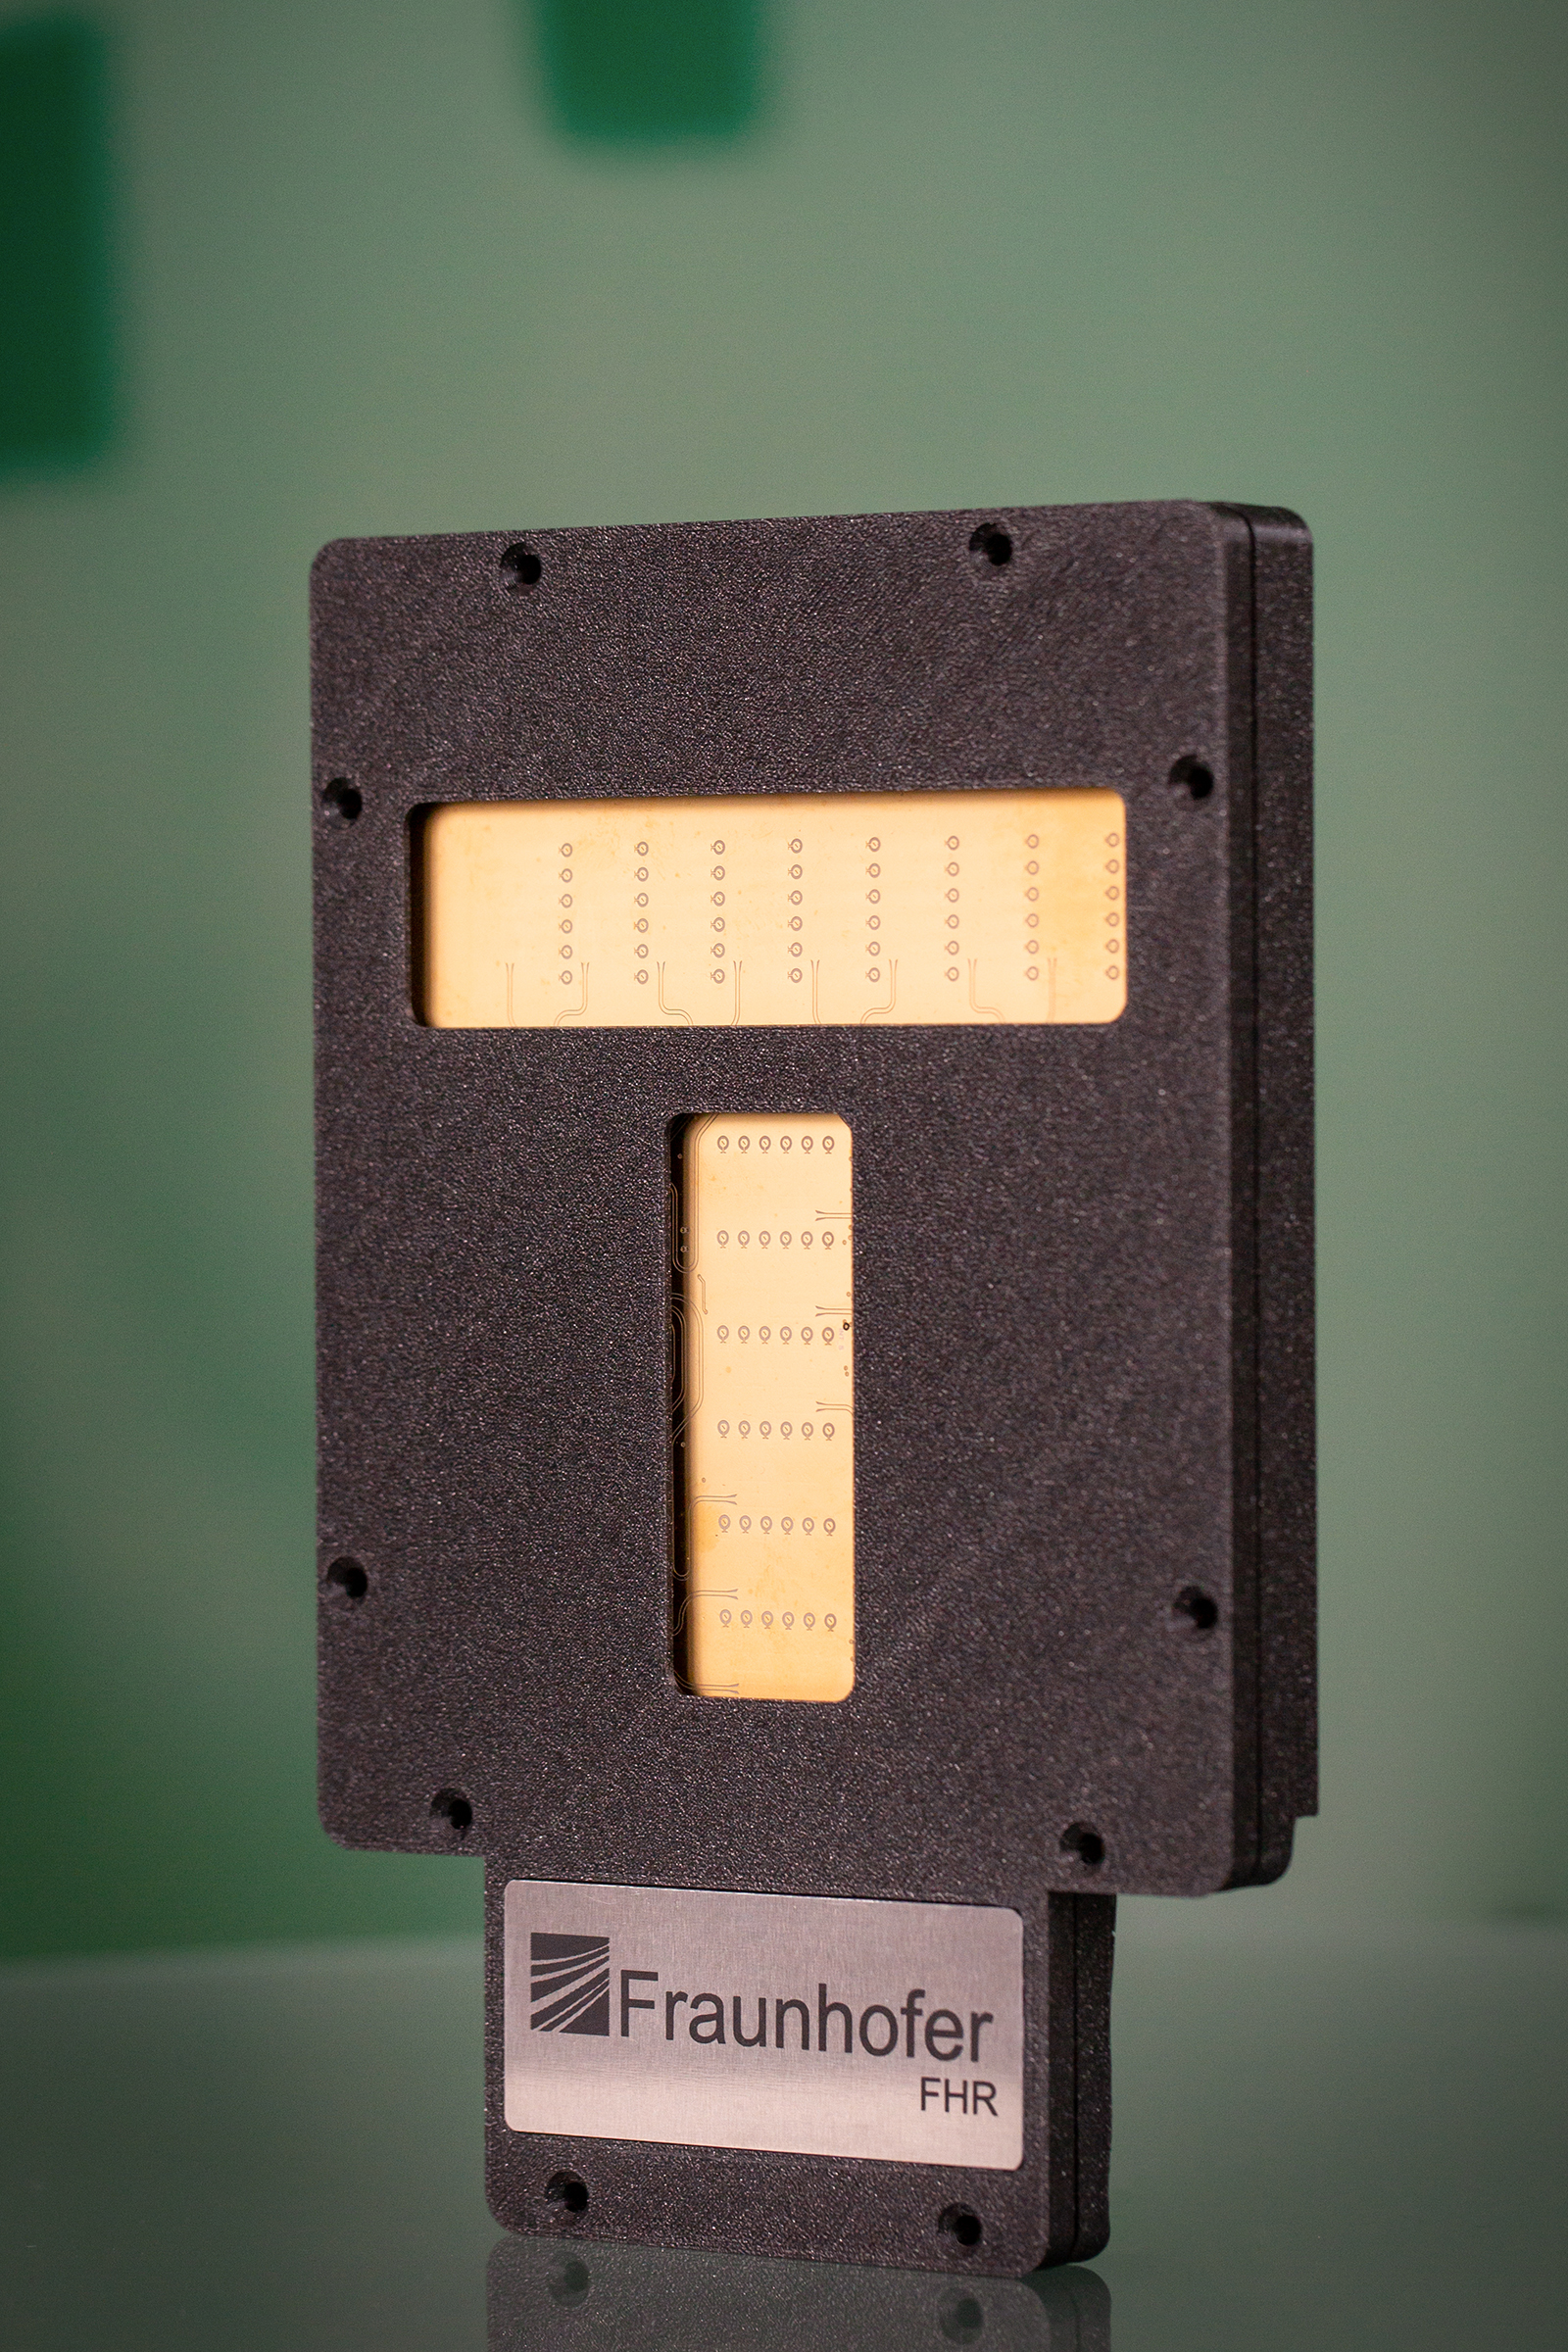 MIMO radar sensor for motion capture, developed at Fraunhofer FHR.